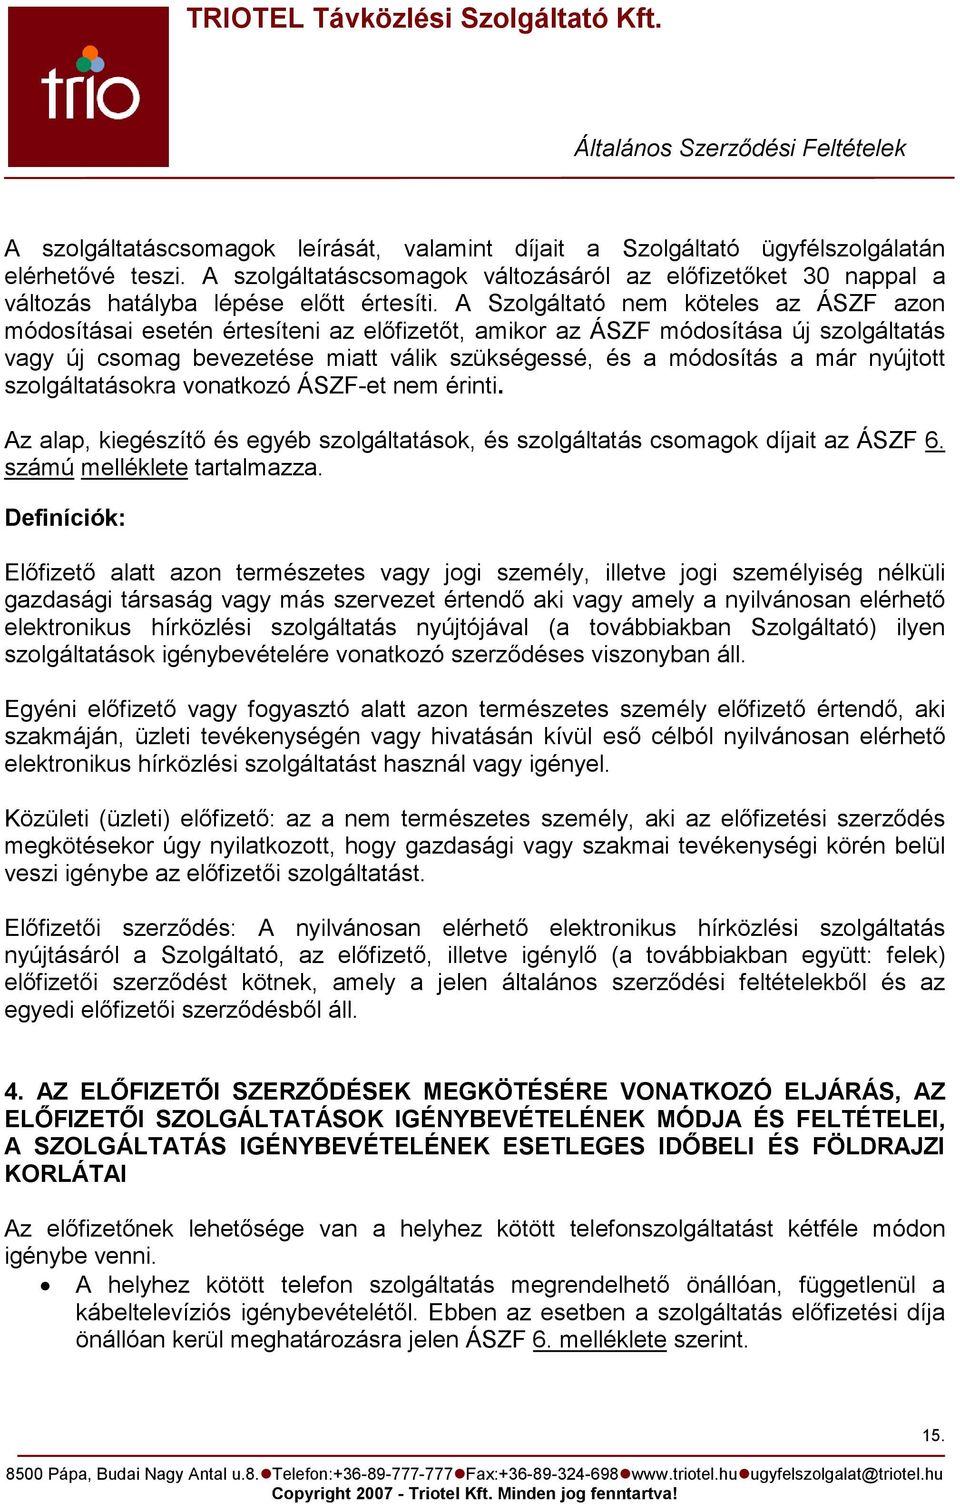 TRIOTEL Távközlési Kft Pápa, Budai Nagy Antal u. 8. Adószám: - PDF Free  Download